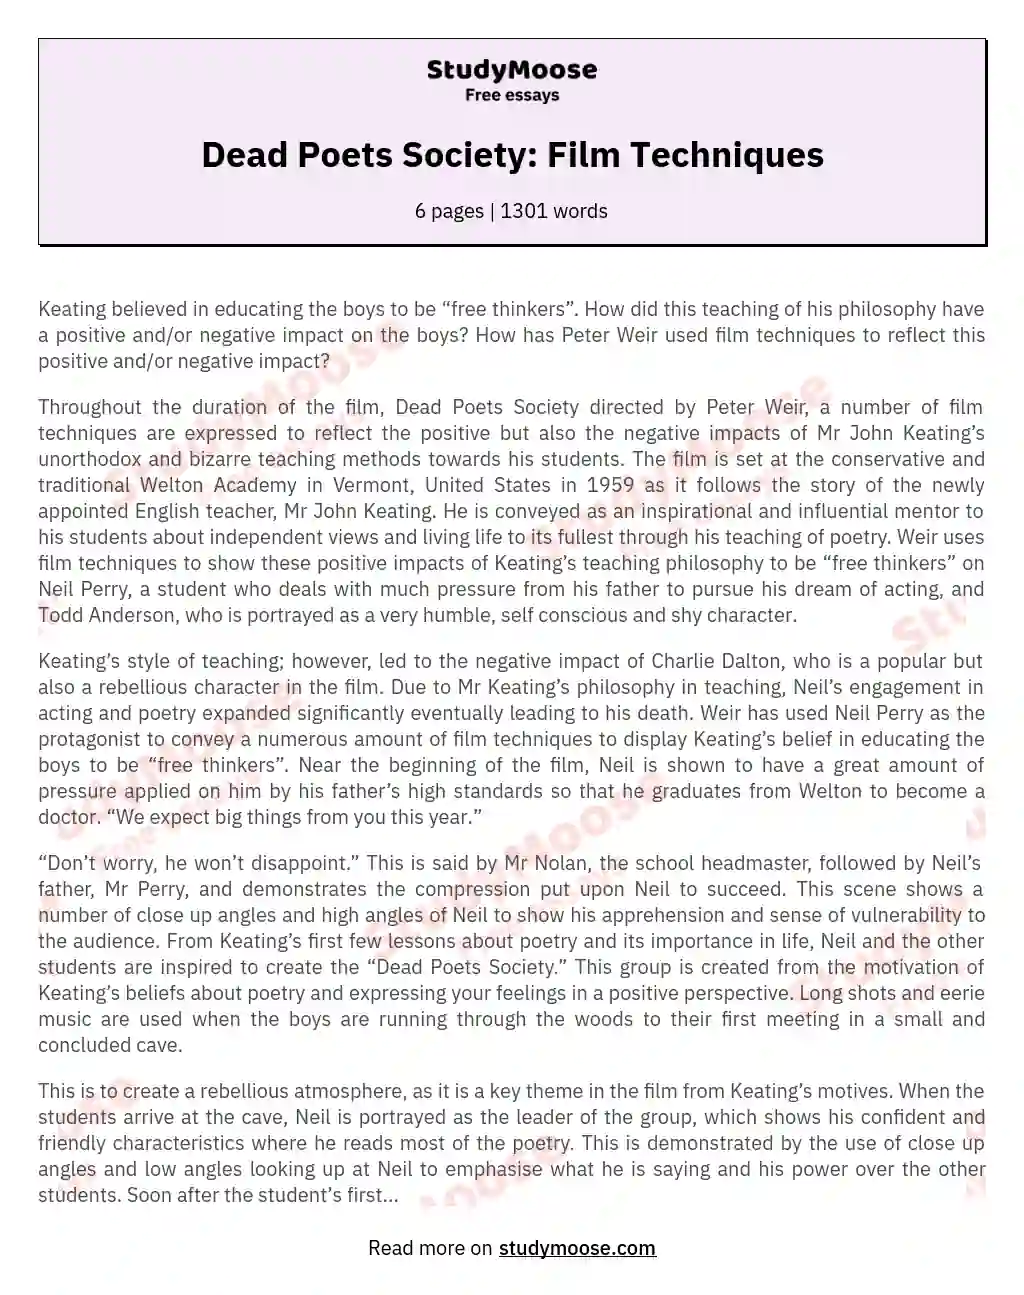 Dead Poets Society: Film Techniques essay